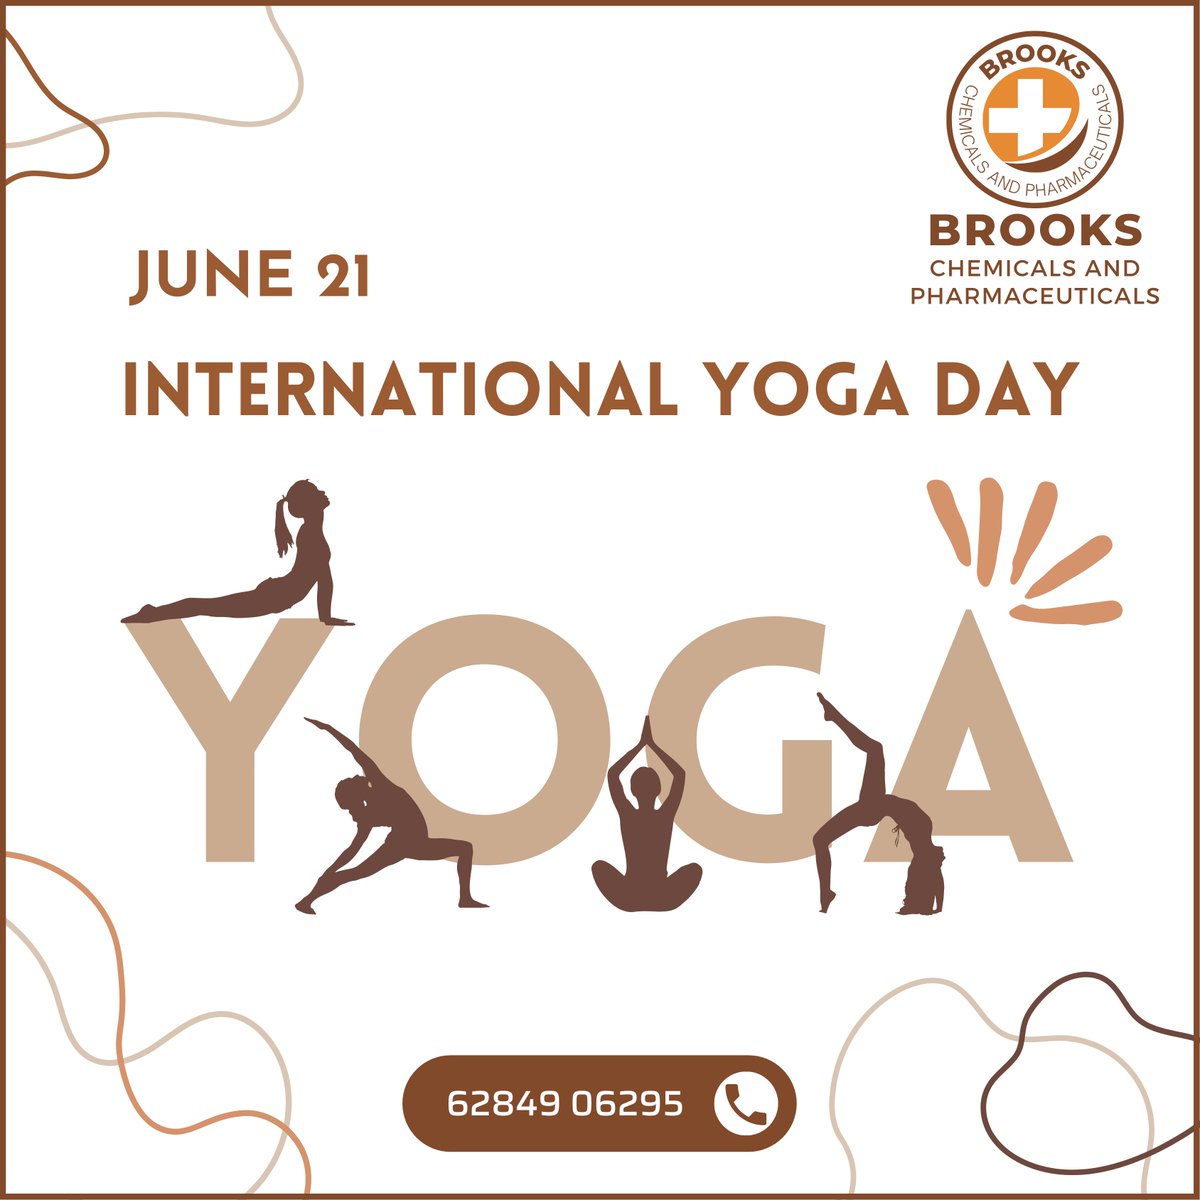 Happy International Yoga Day. . . #internationalyogaday #yoga #yogaday #yogapractice #yogainspiration #yogalife #yogaeverydamnday #meditation #yogaeverywhere #yogaposes #fitness #yogalove #yogagirl #india #yogaeveryday #yogachallenge #worldyogaday #yogateacher #health #yogaathome